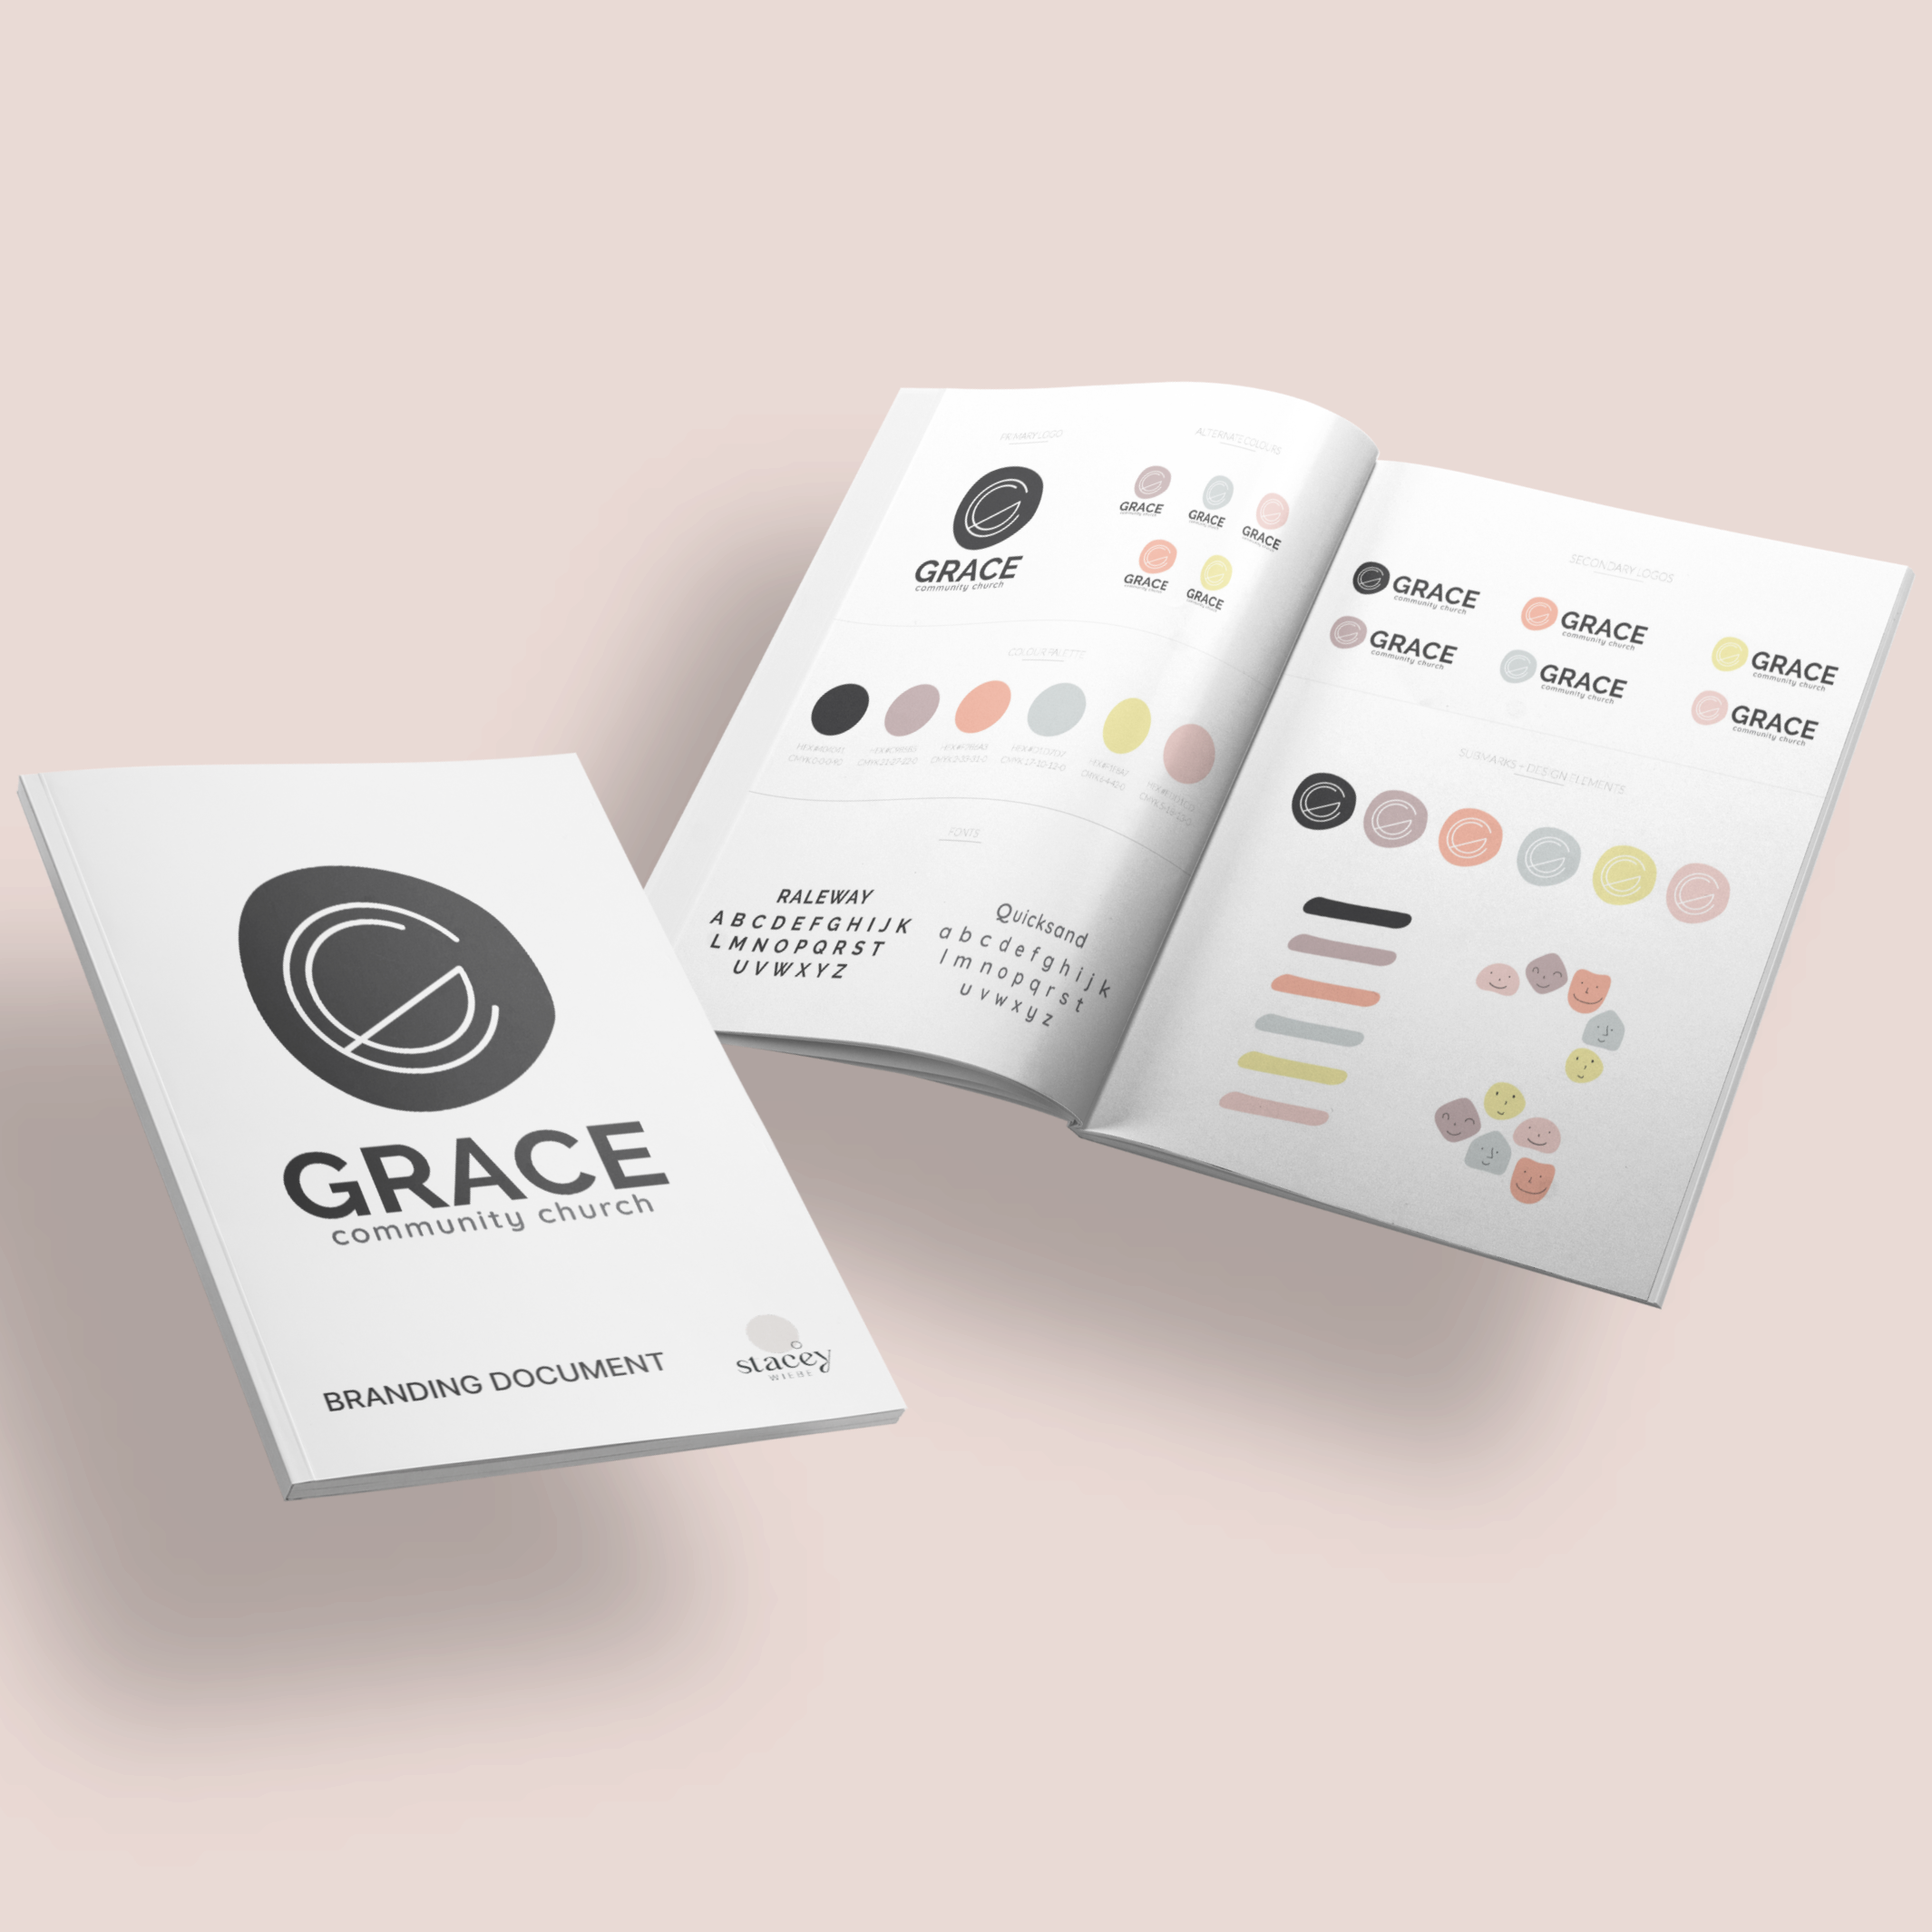 Grace Community Church branding document